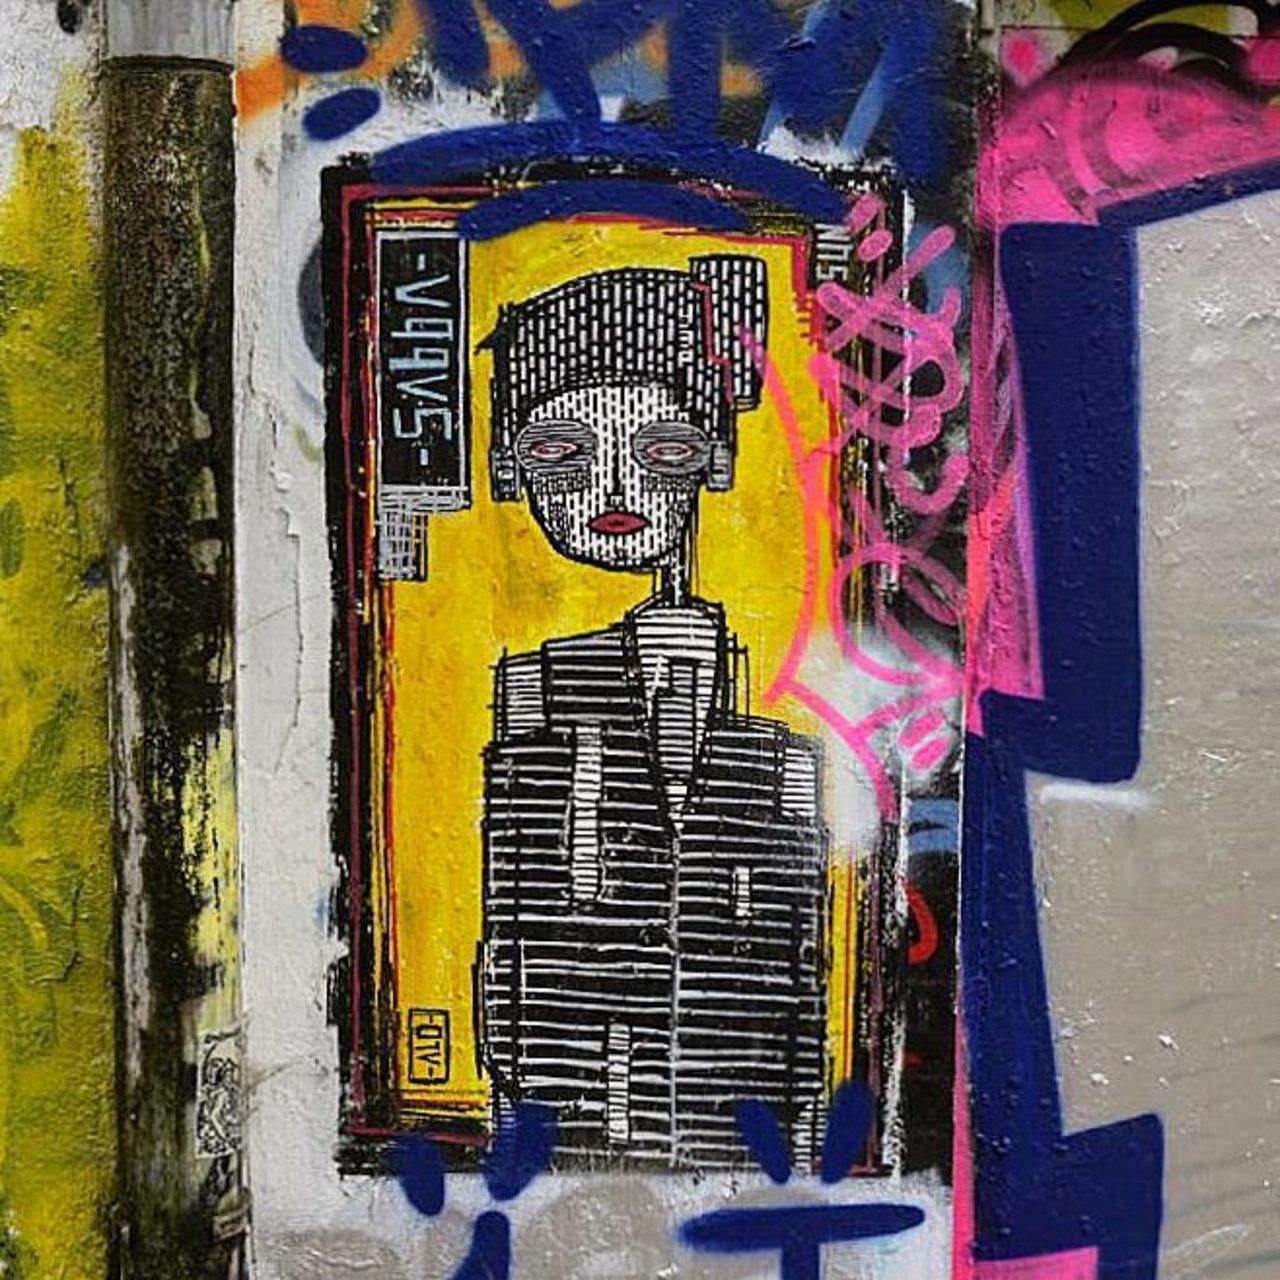 #Paris #graffiti photo by @jpoesse http://ift.tt/1S1scMz #StreetArt https://t.co/yjmhuCKHpP